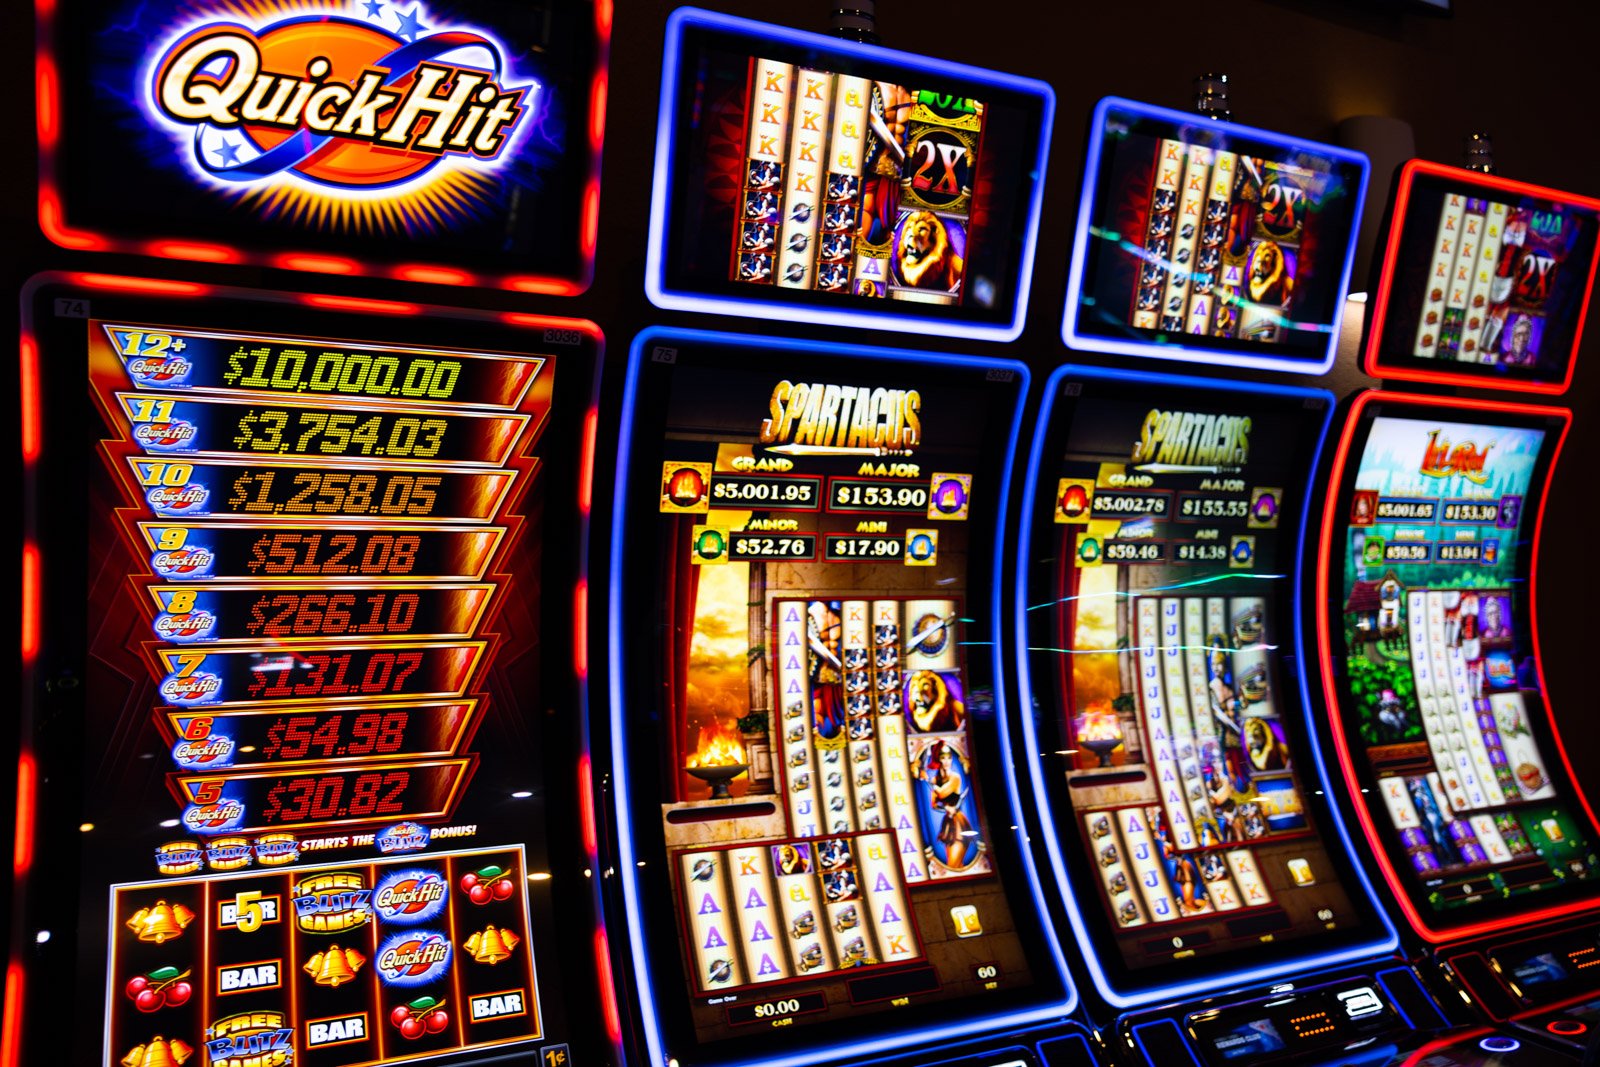 rosebud-casino-gaming-floor-slot-machines-near-valentine-nebraska-12.jpg